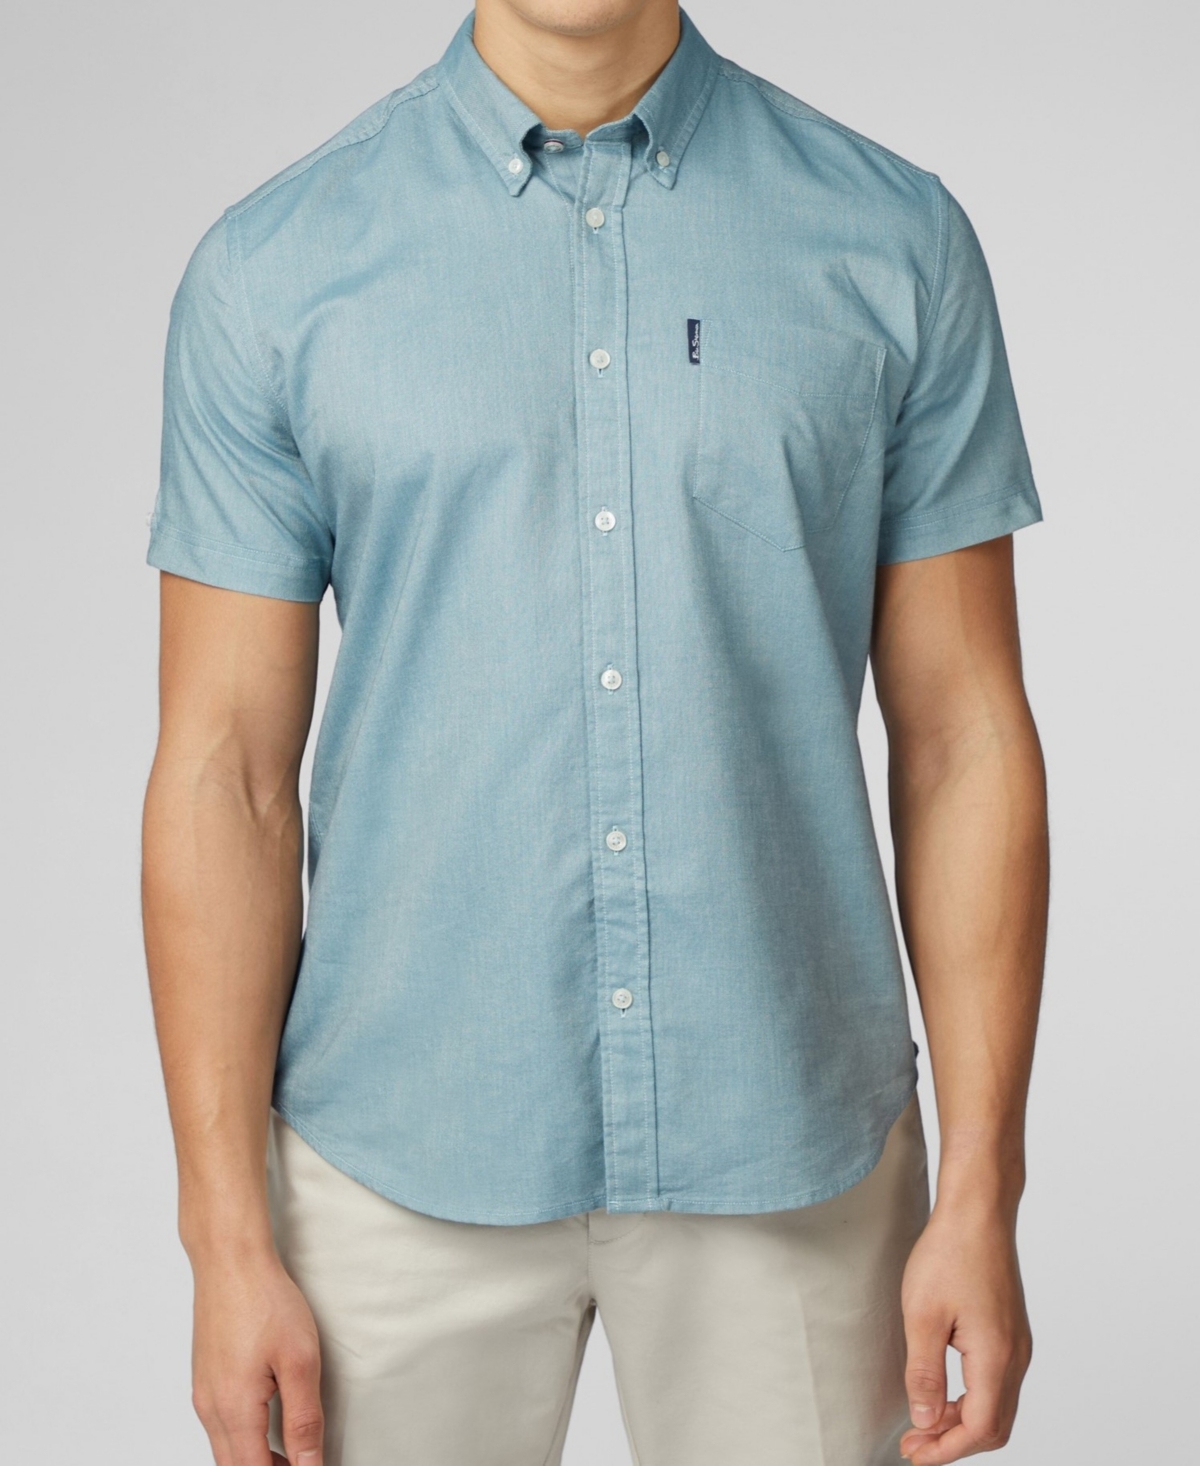 Men's Signature Oxford Short Sleeve Shirt - Teal